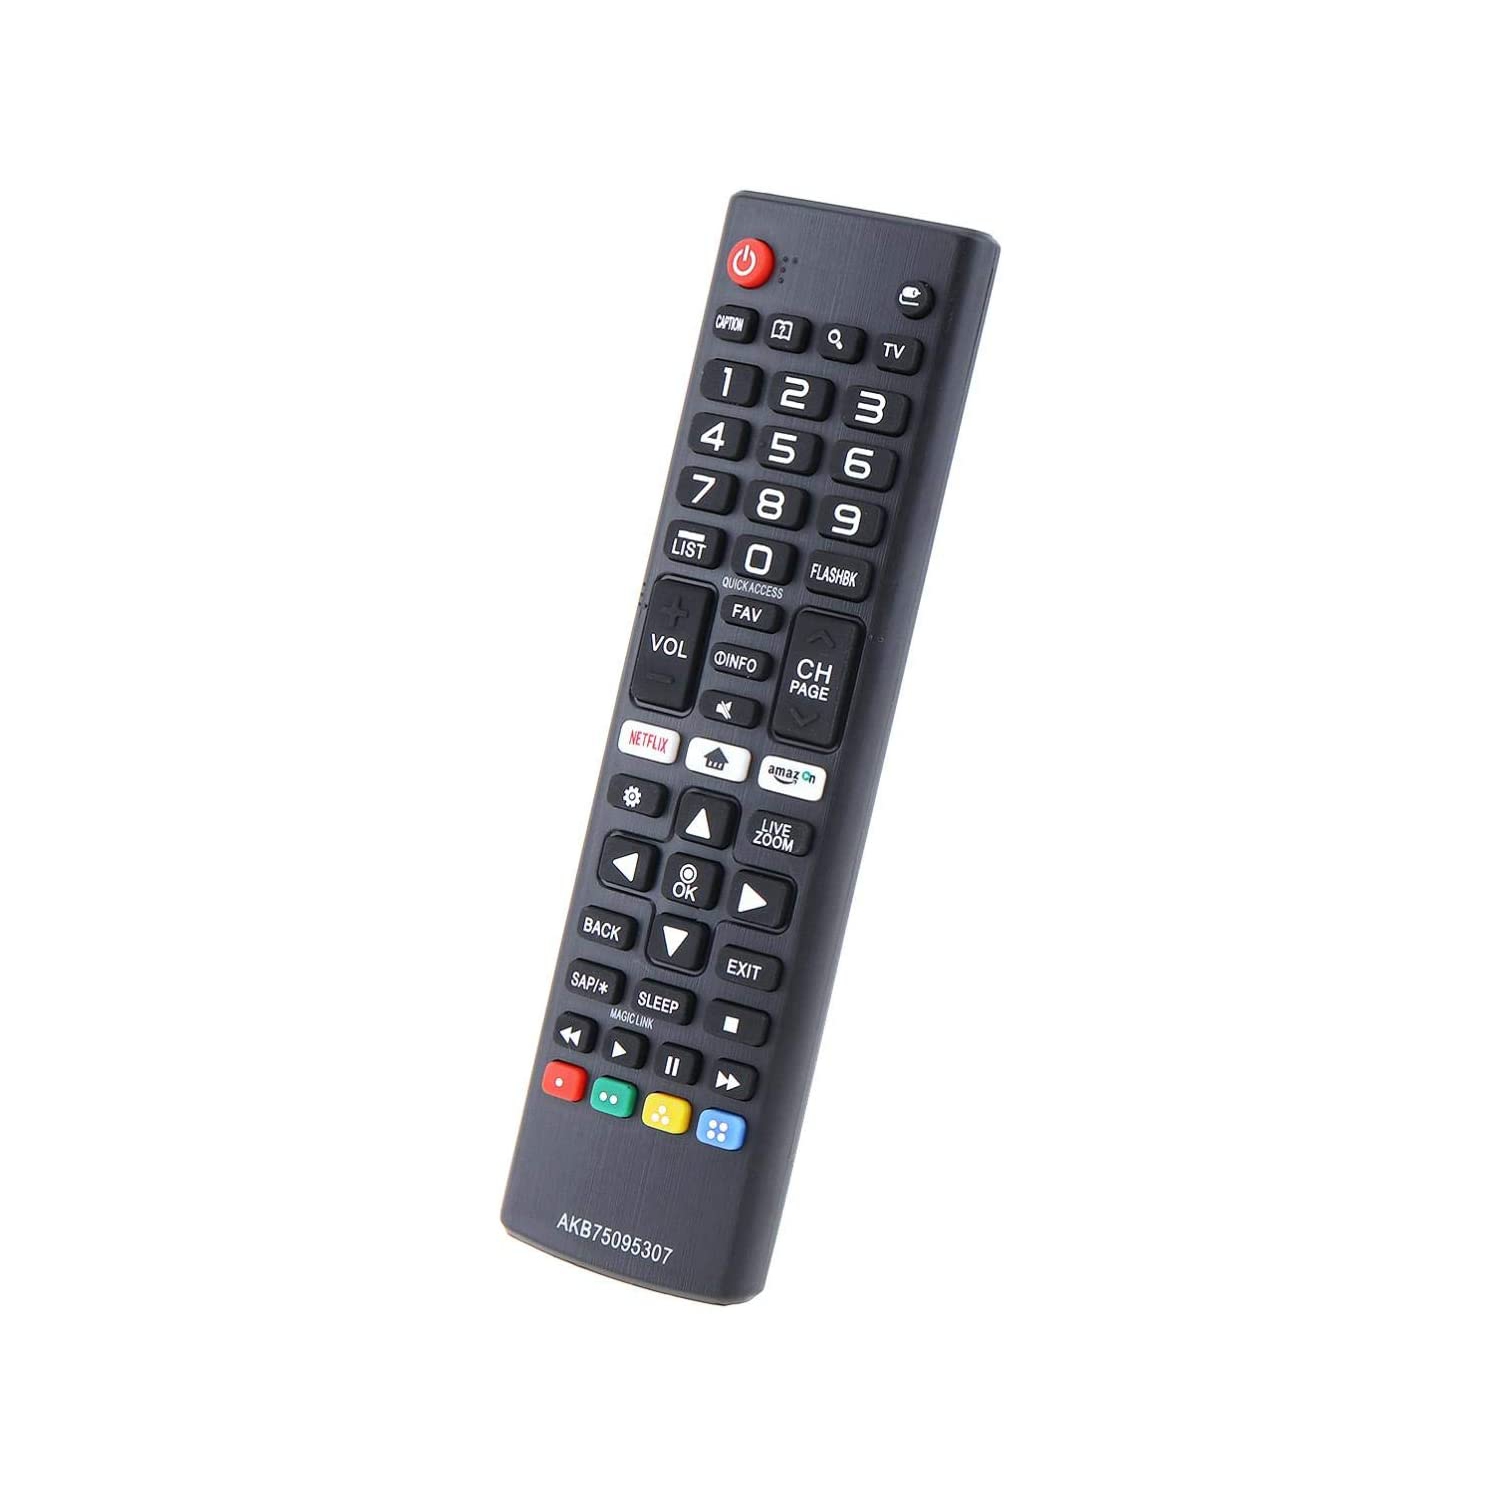 Replacement New AKB75095307 Remote Control for LG Smart TV 3D LED LCD 32LJ550B 55LJ5500 AKB75095303 Netflix